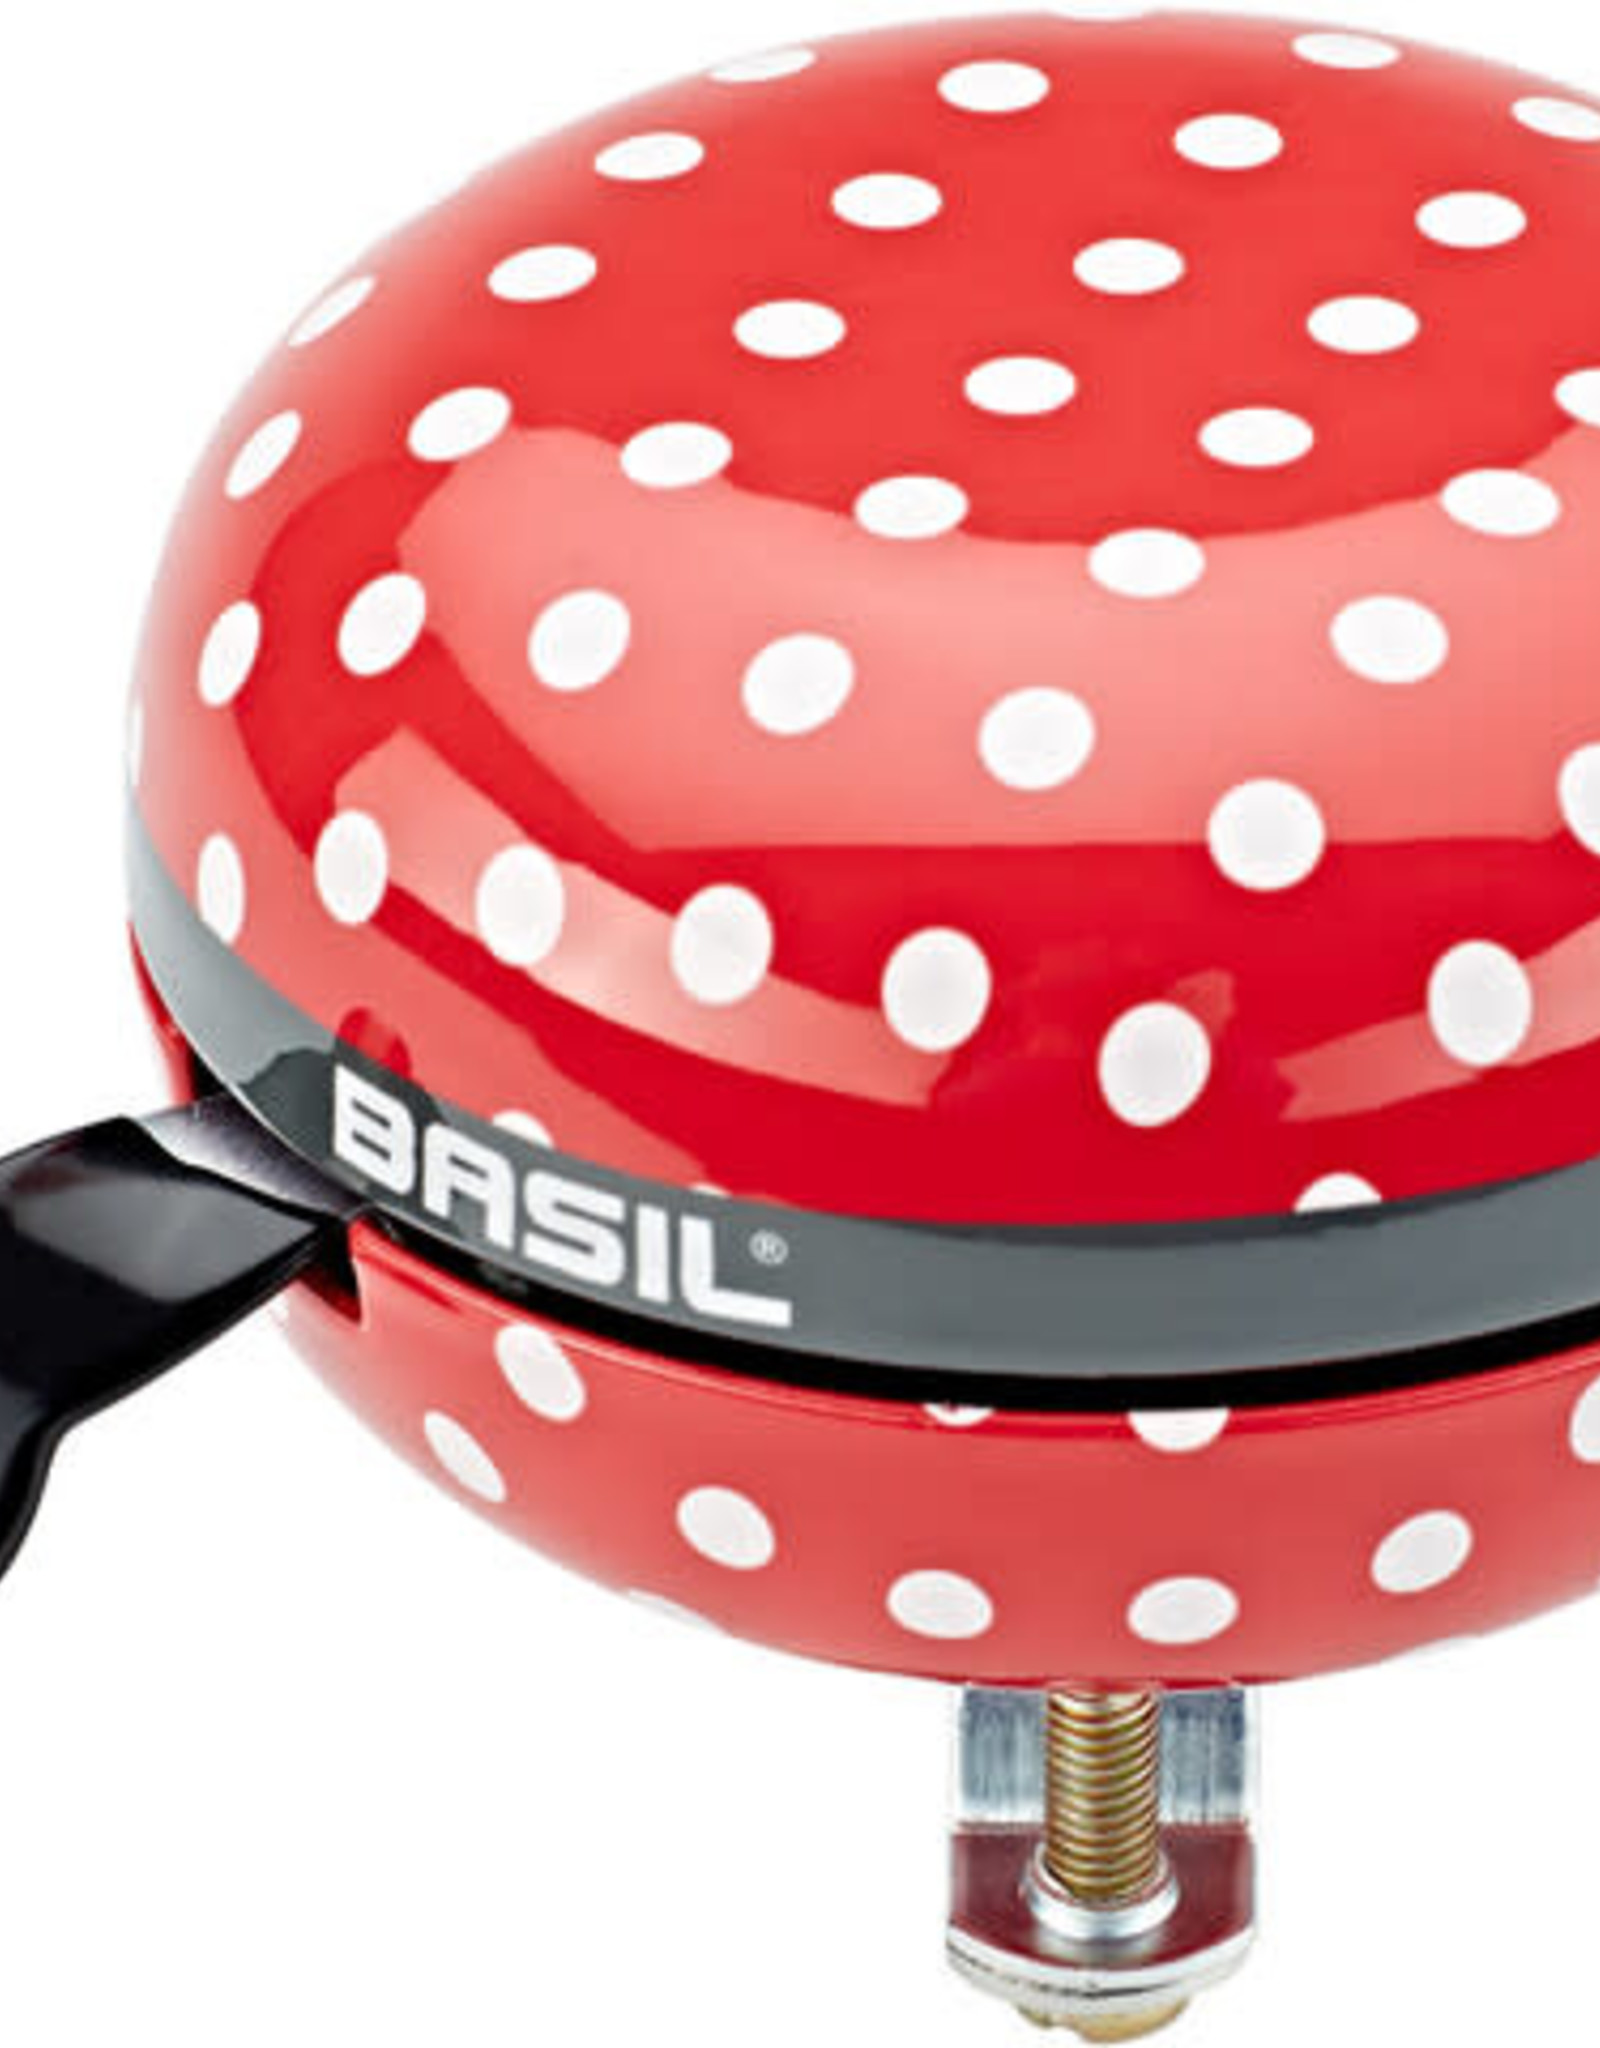 Basil Basil - Big Bell, Polkadot, Red/White dots